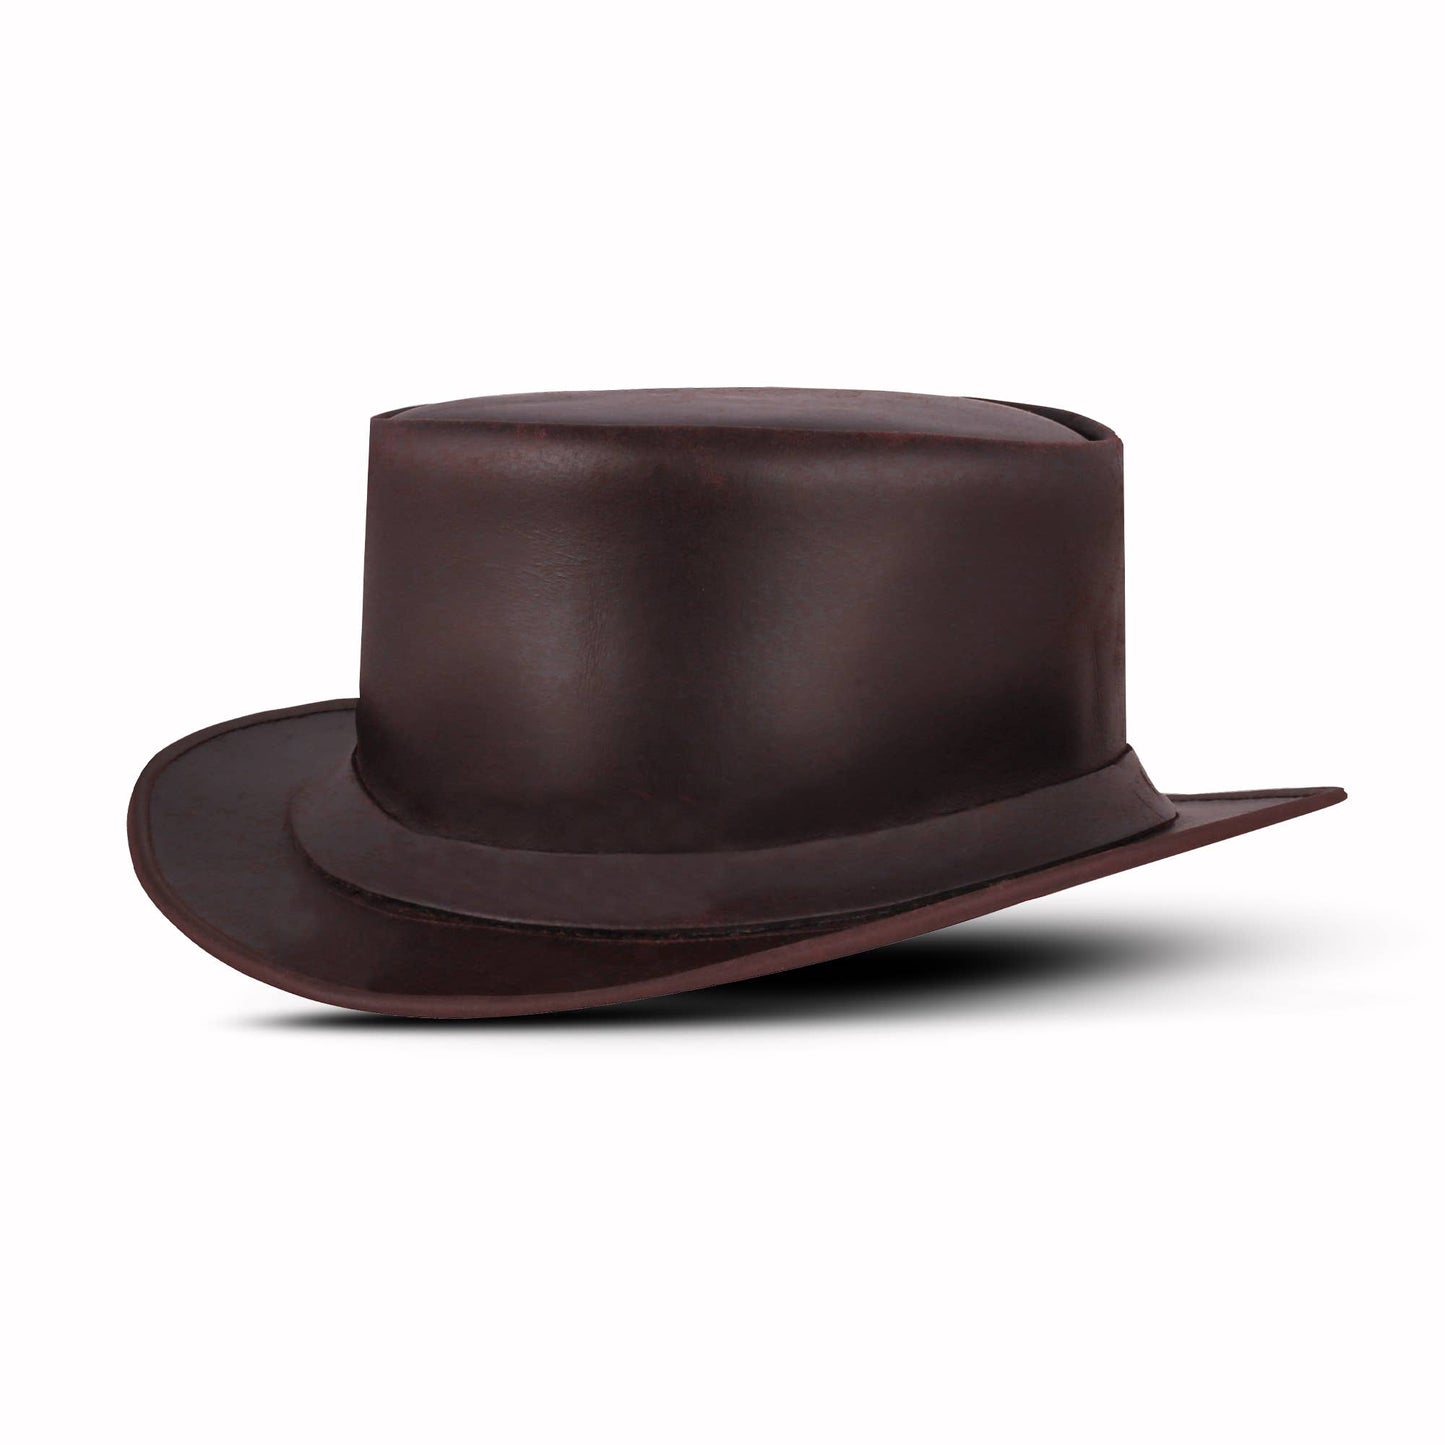 HADZAM Brown Genuine Leather Top Hat